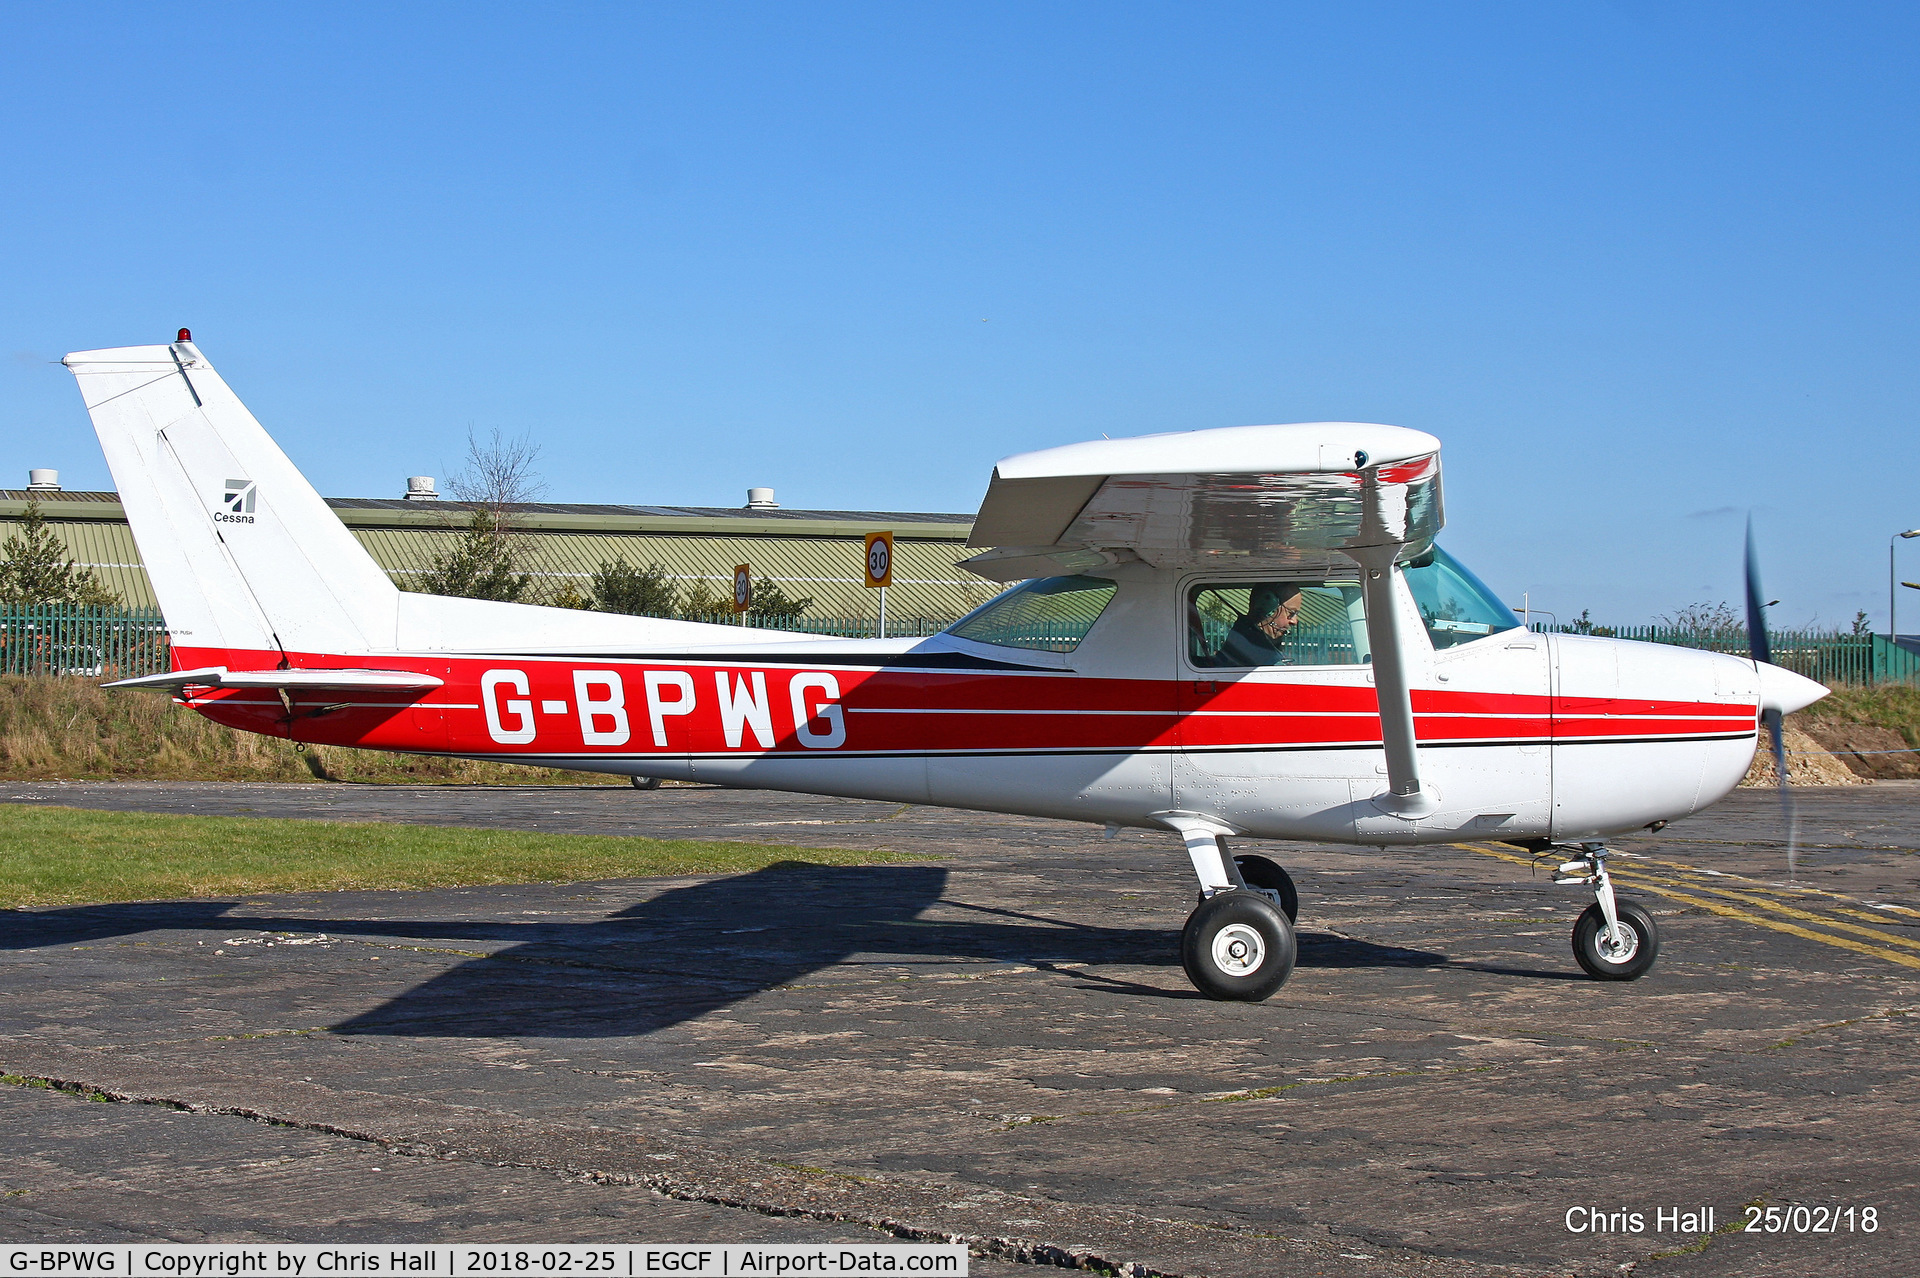 G-BPWG, 1975 Cessna 150M C/N 150-76707, at Sandtoft